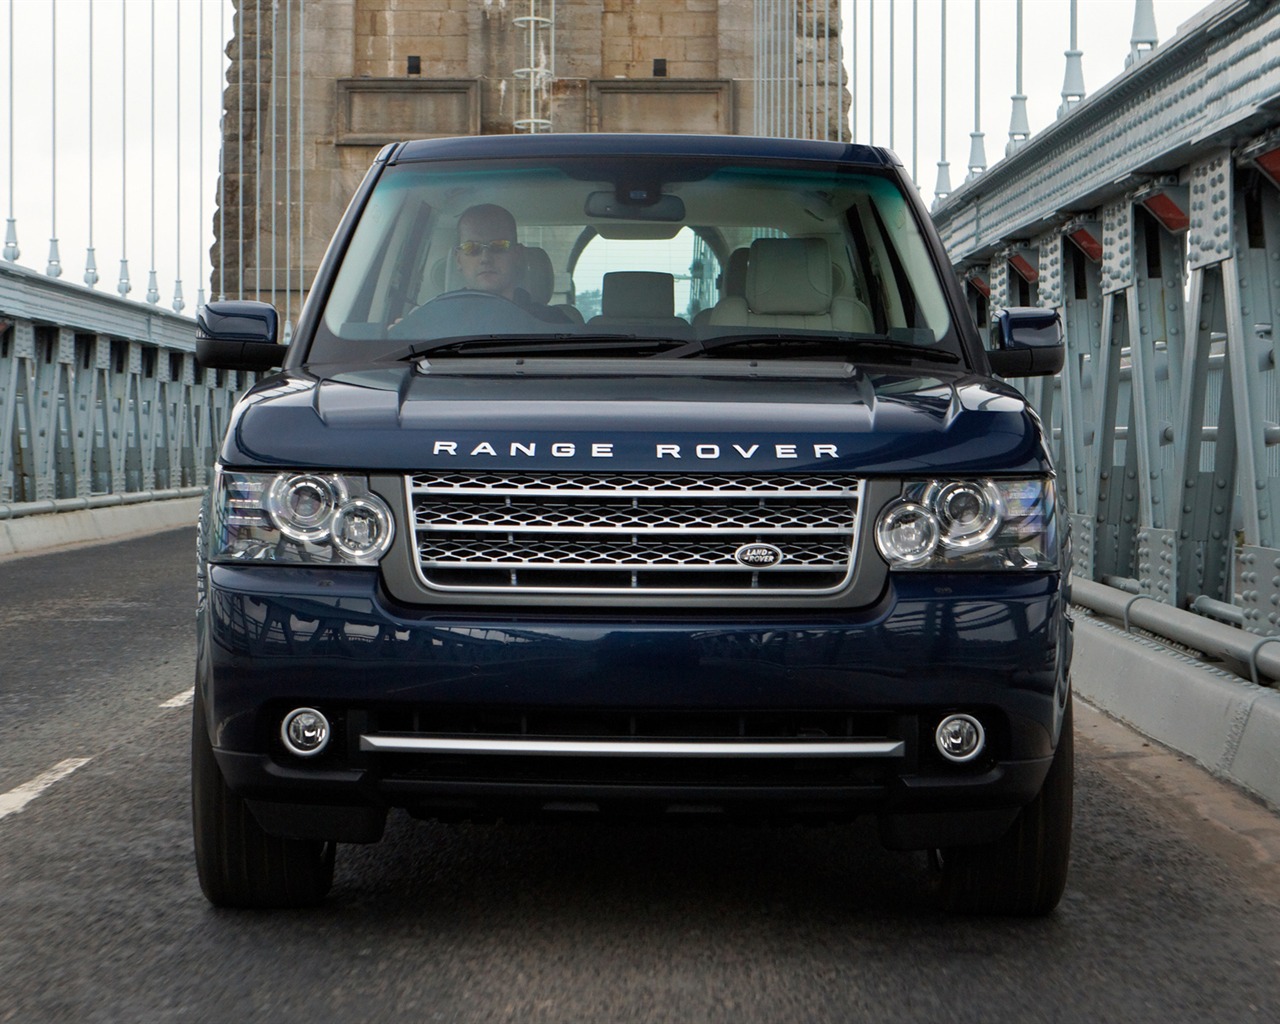 Land Rover Range Rover - 2011 路虎19 - 1280x1024